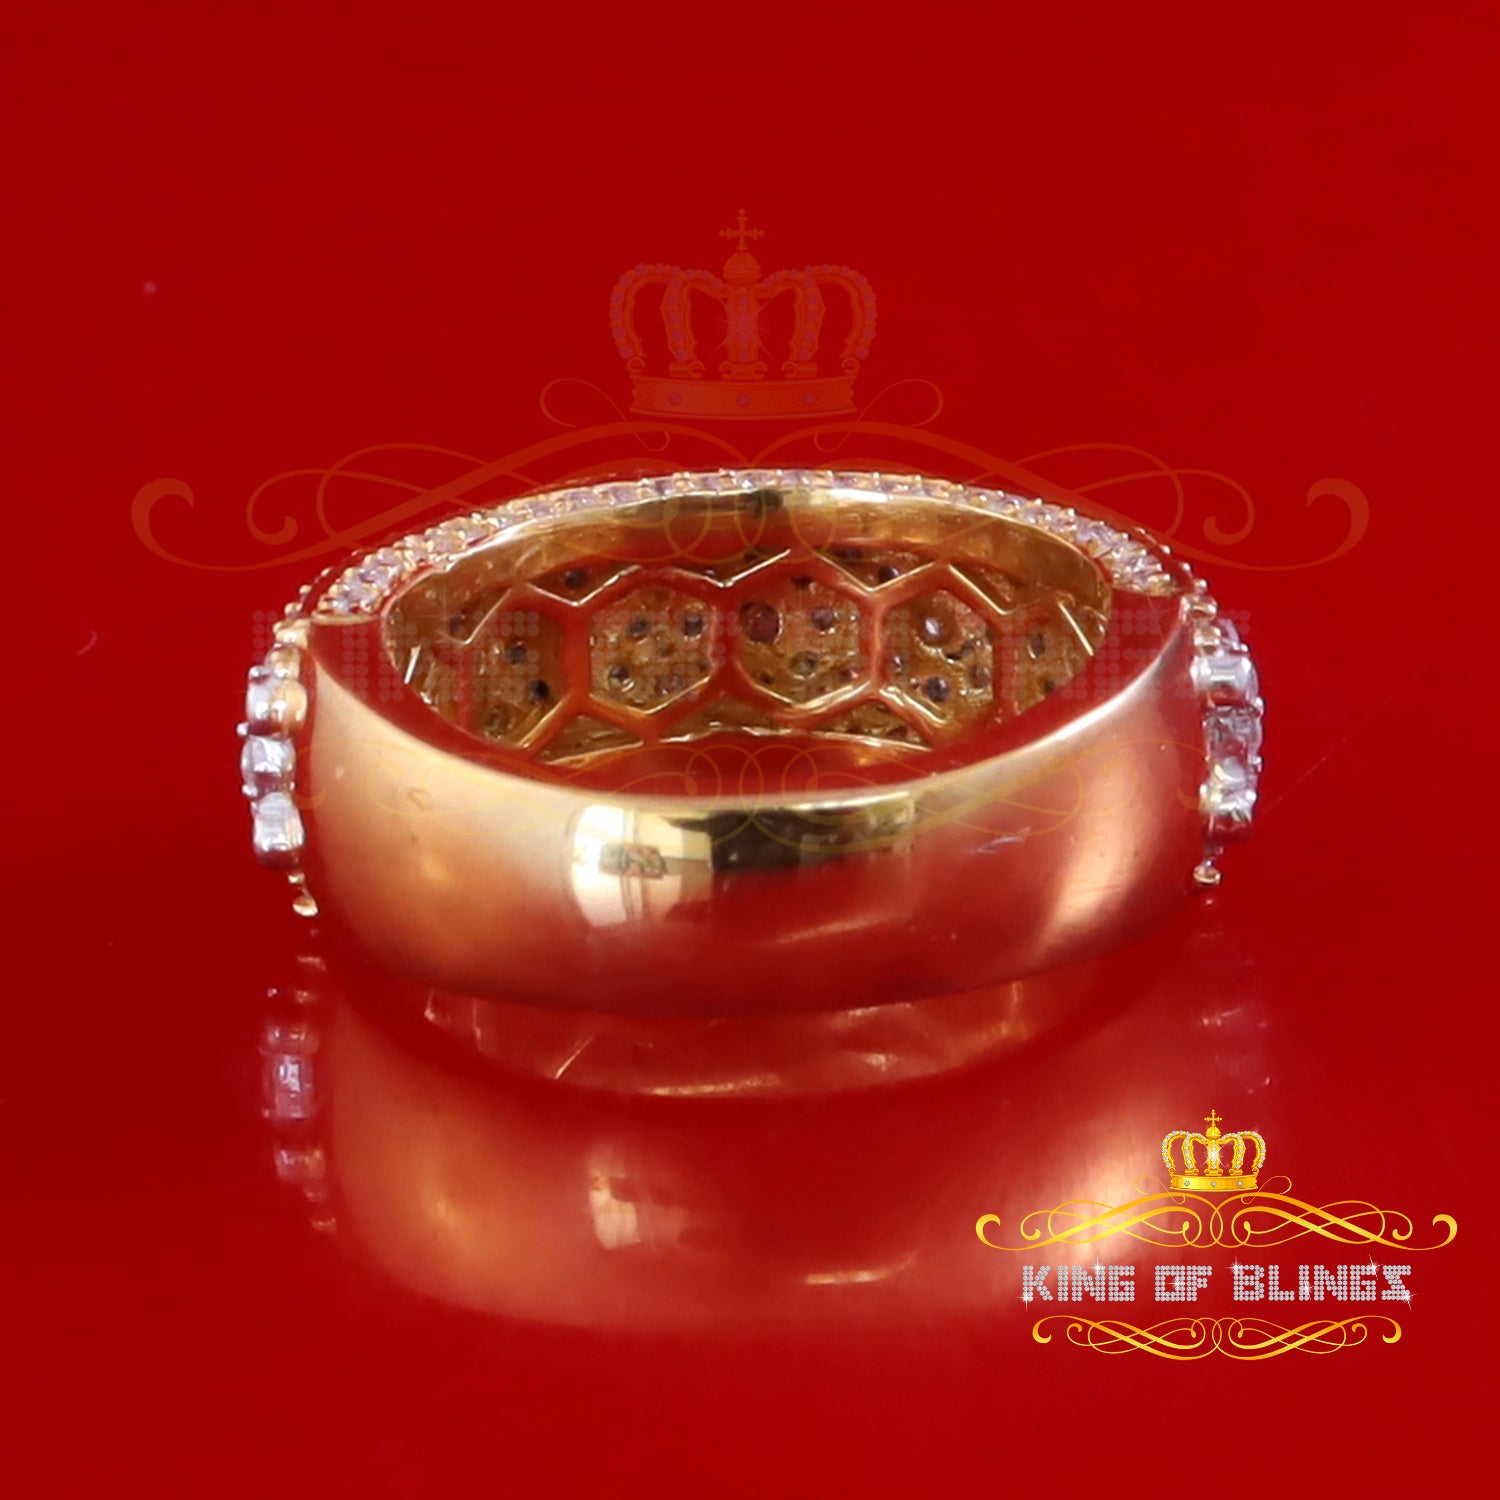 King Of Blings 925 Silver VVS'D Yellow Round Shape 2.50ct moissanite Band Ring size 8 For Men's KING OF BLINGS